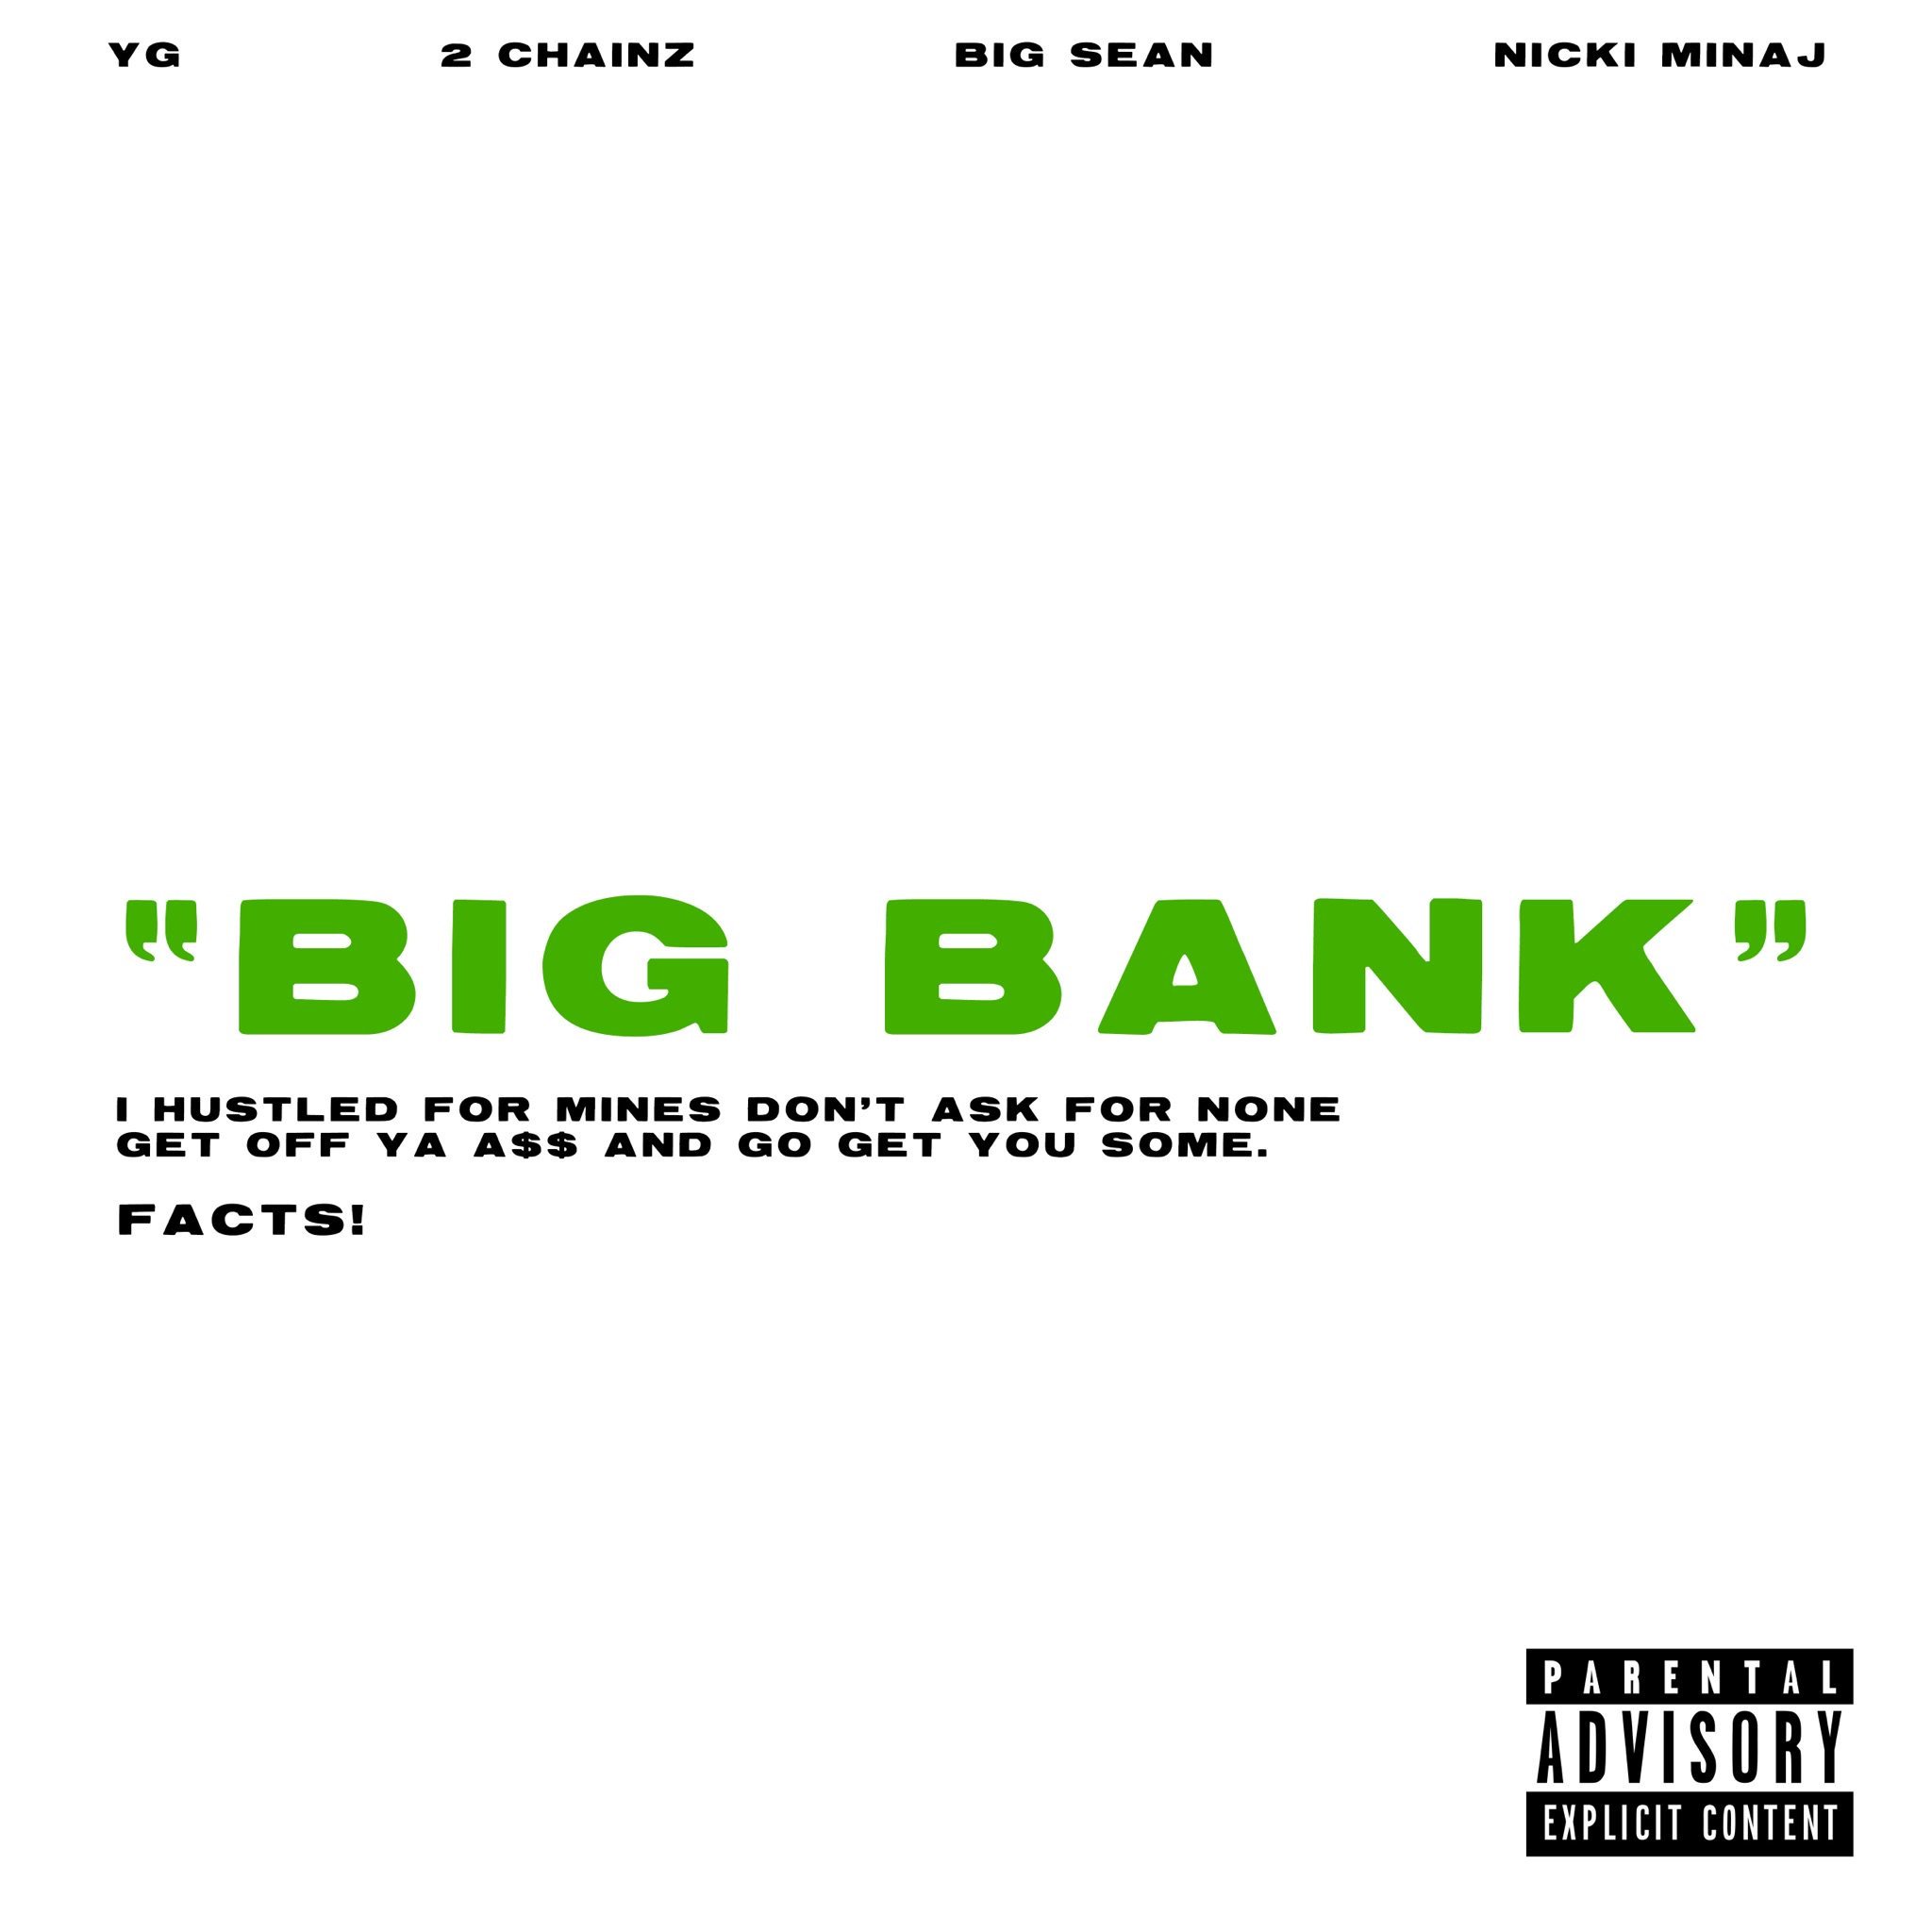 YG – Big Bank (feat. 2 Chainz, Big Sean, & Nicki Minaj)